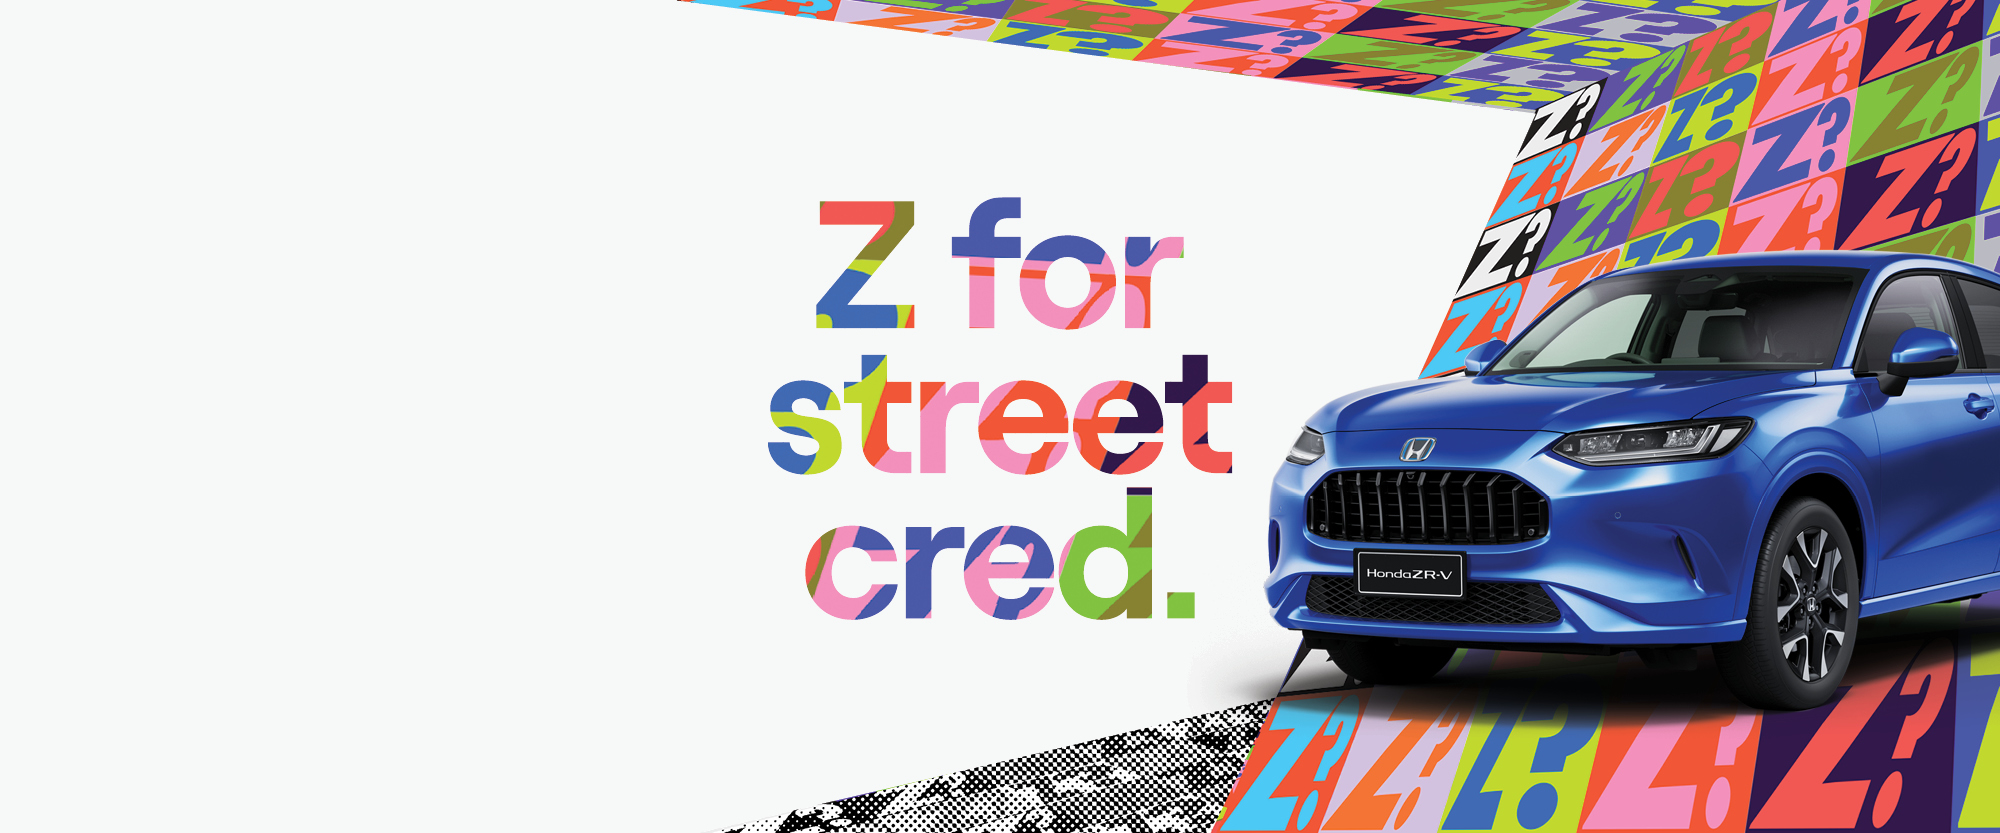 HondaZRV-StreetCred-2000x833.jpg